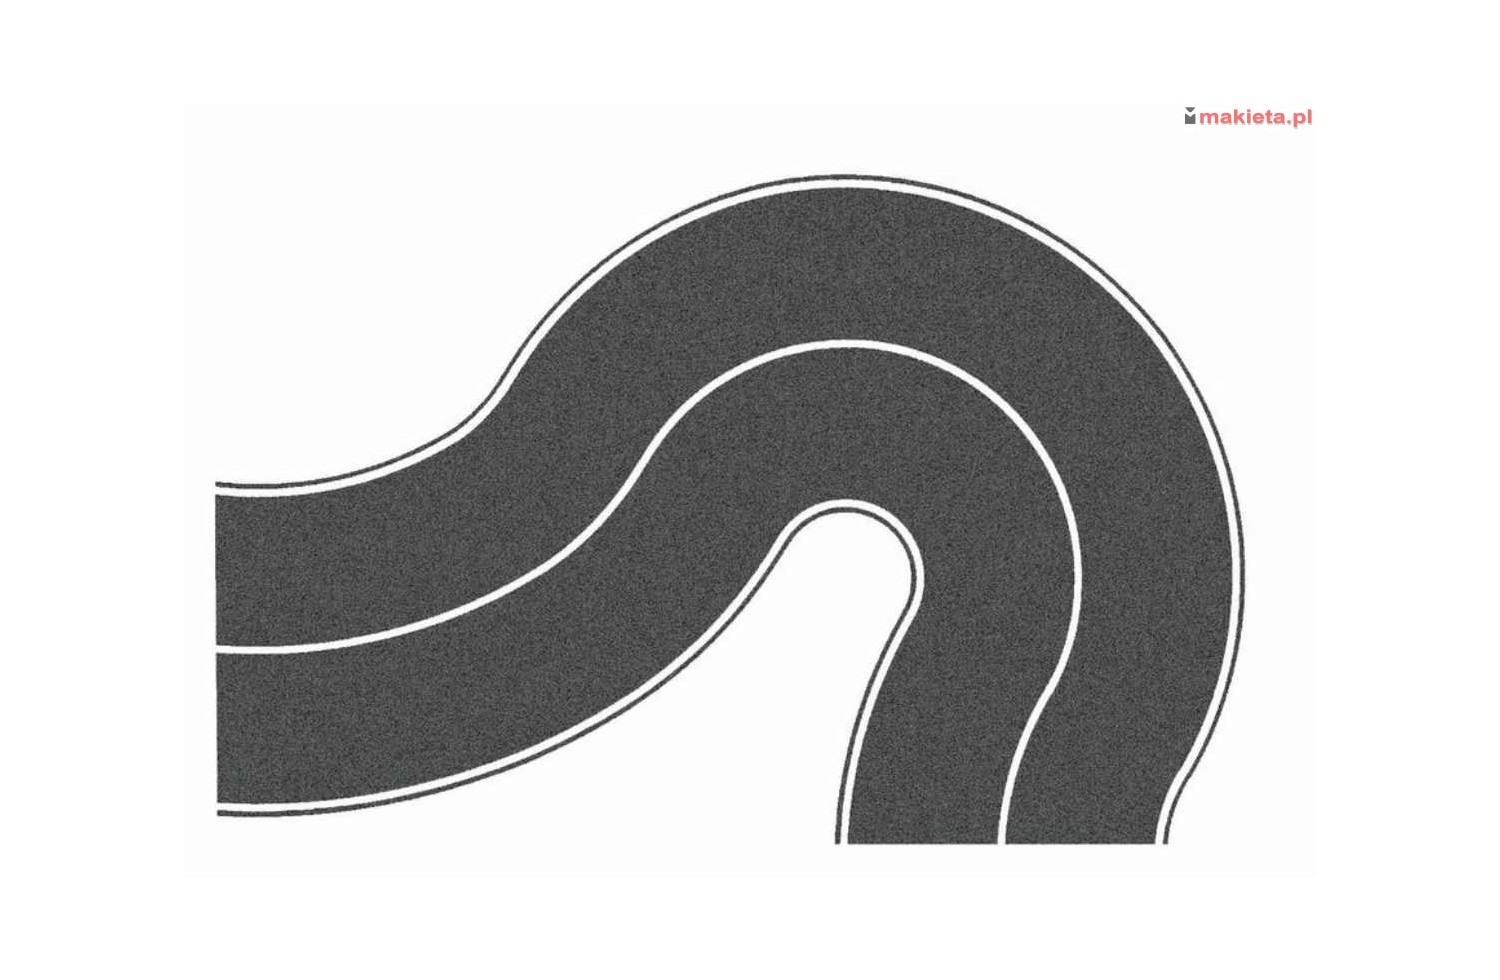 NOCH 60707. Droga asfaltowa - zakręty (66mm), skala H0